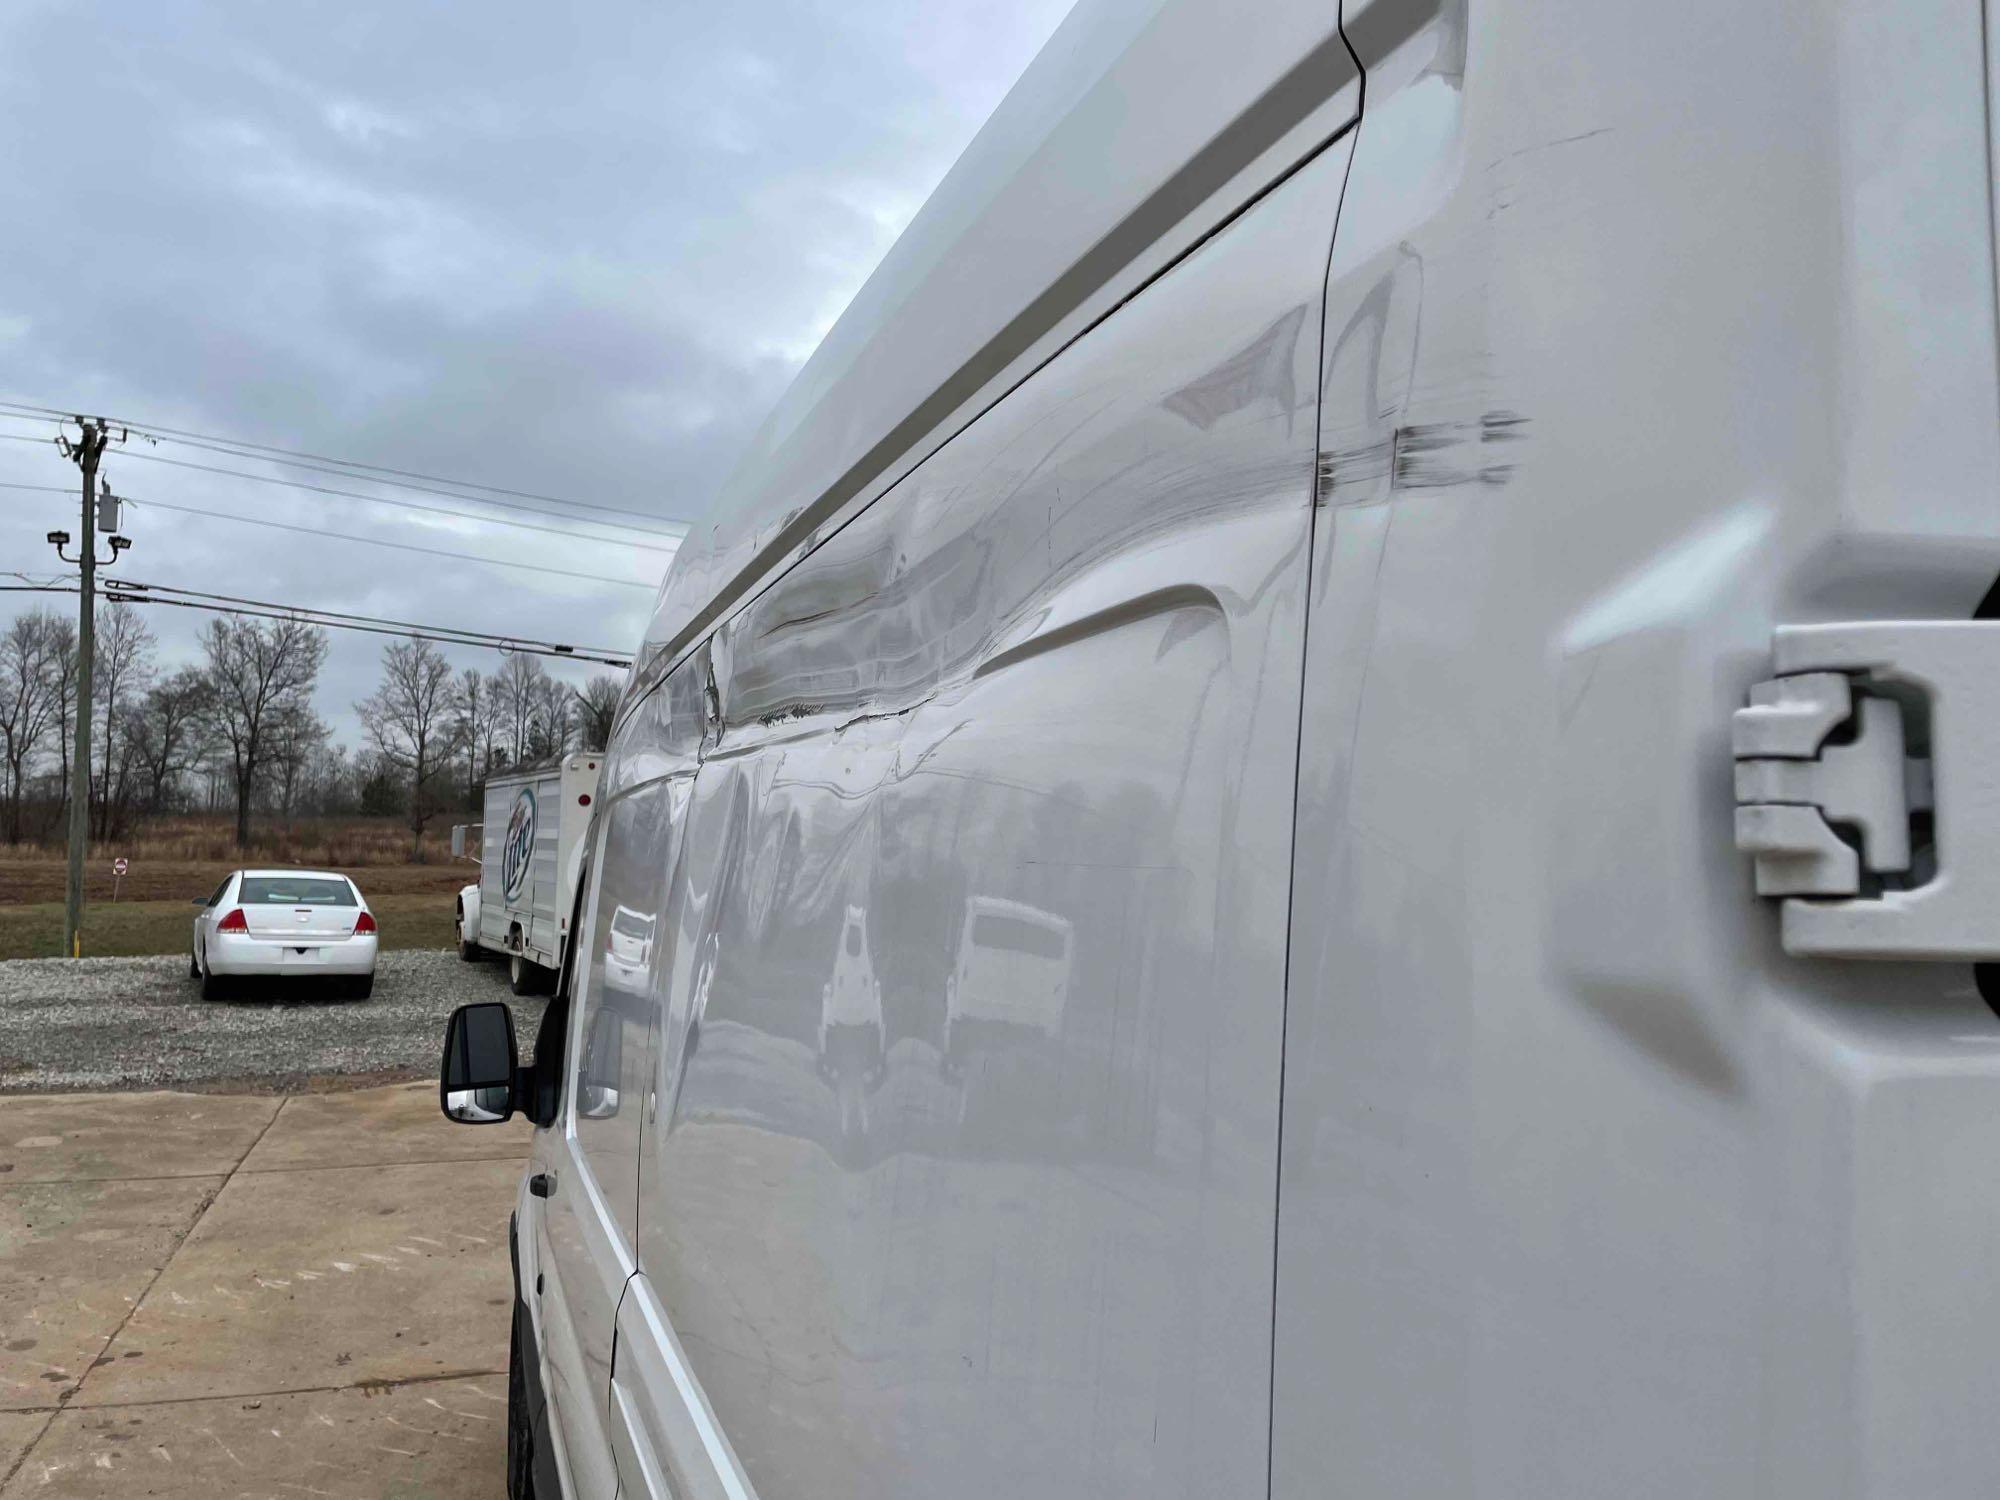 2019 Ford Transit Van Van, VIN # 1FTYR2XM0KKA68237